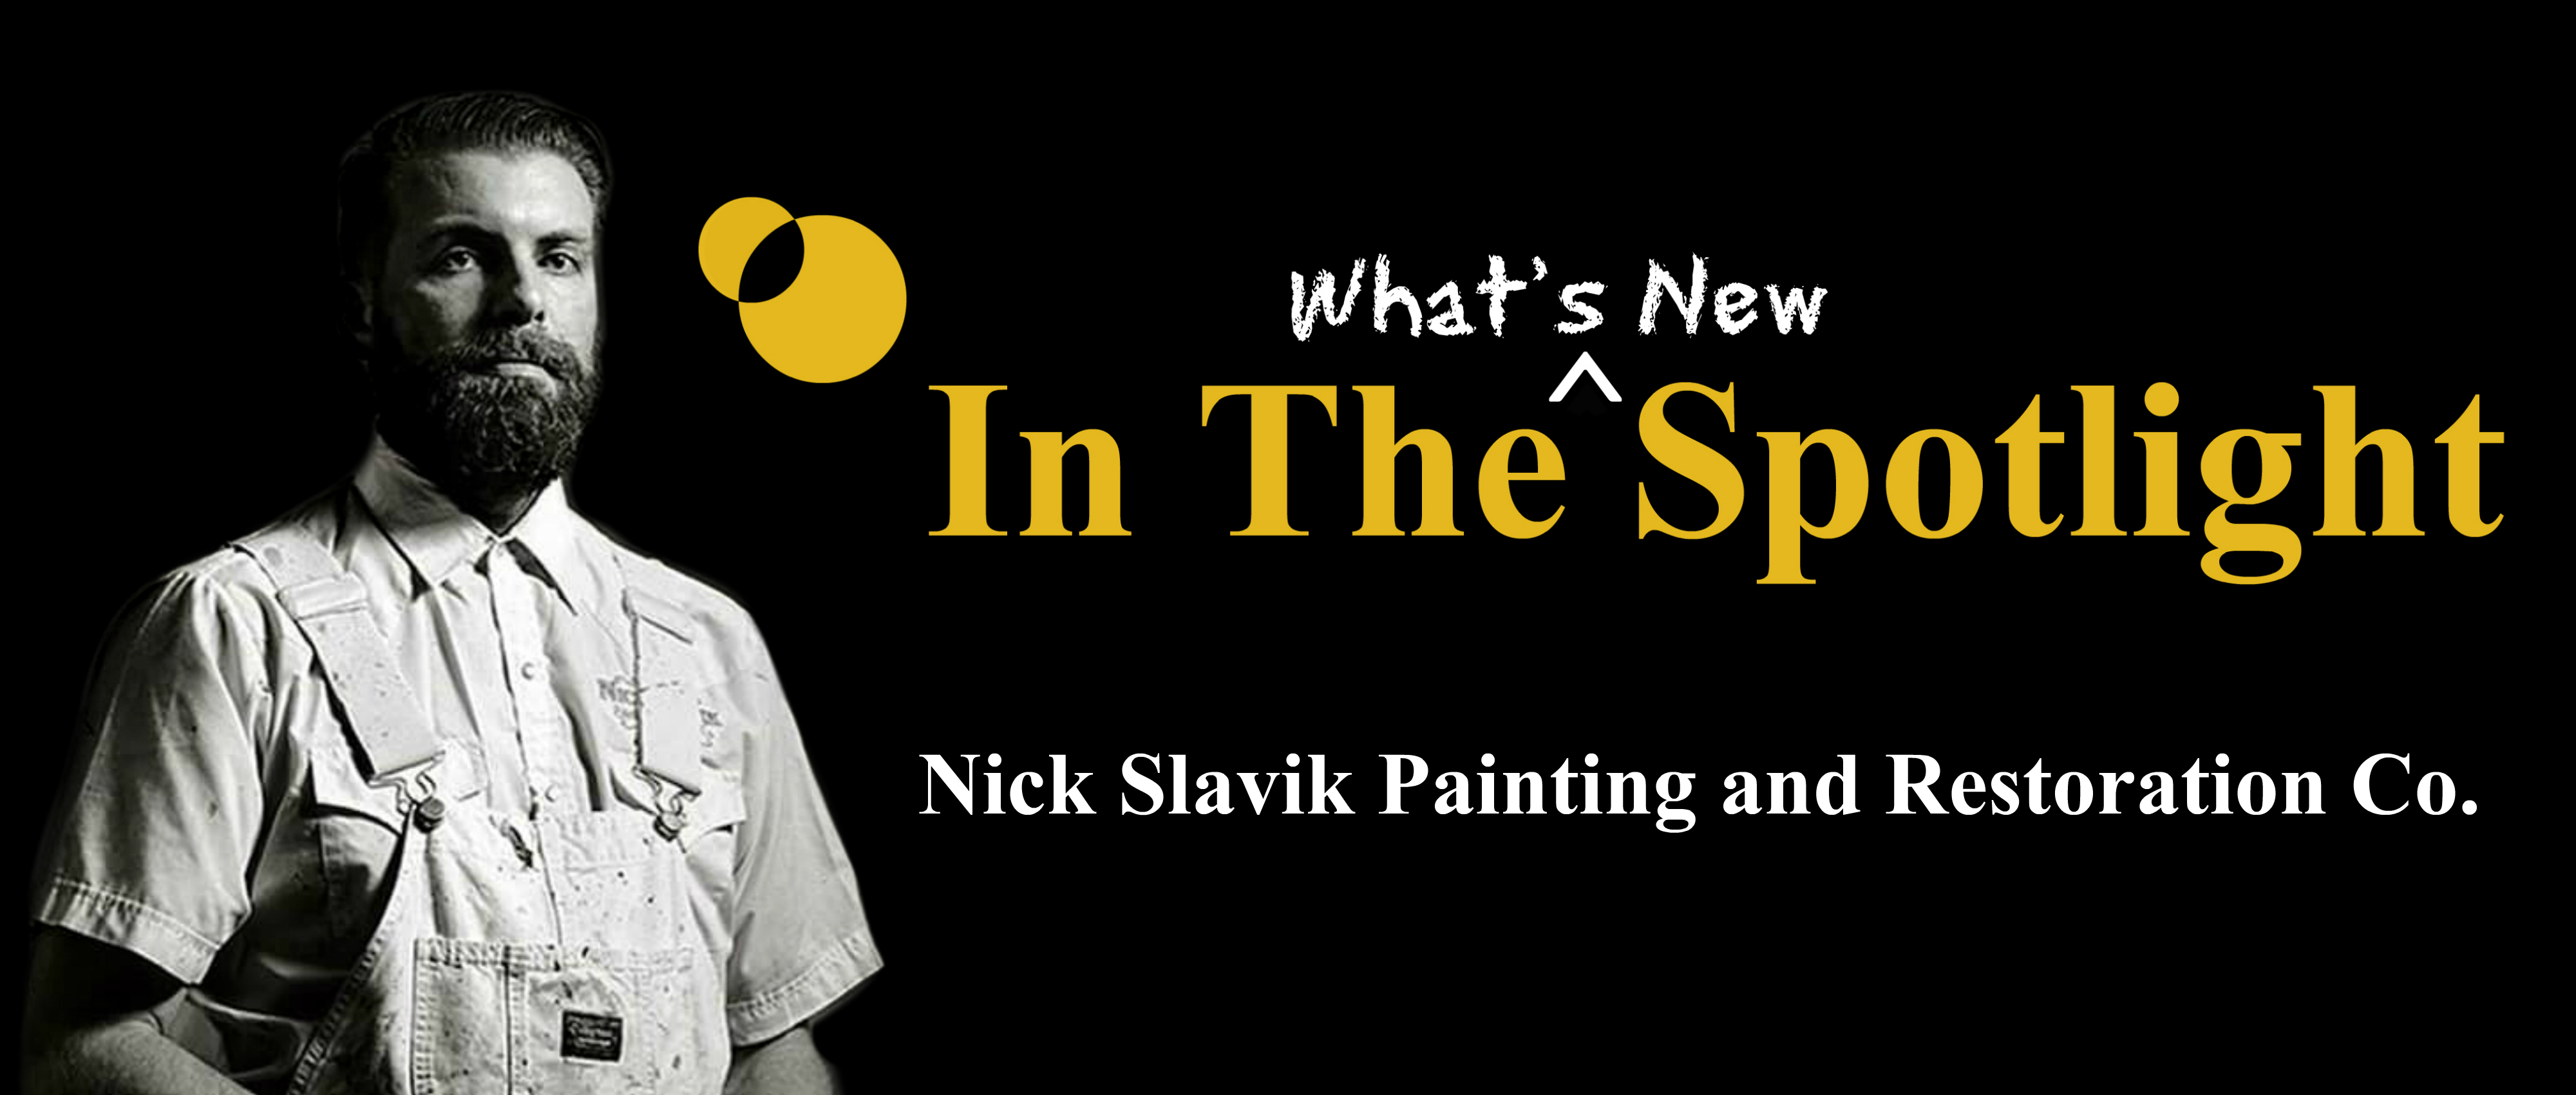 Nick Slavik Painting